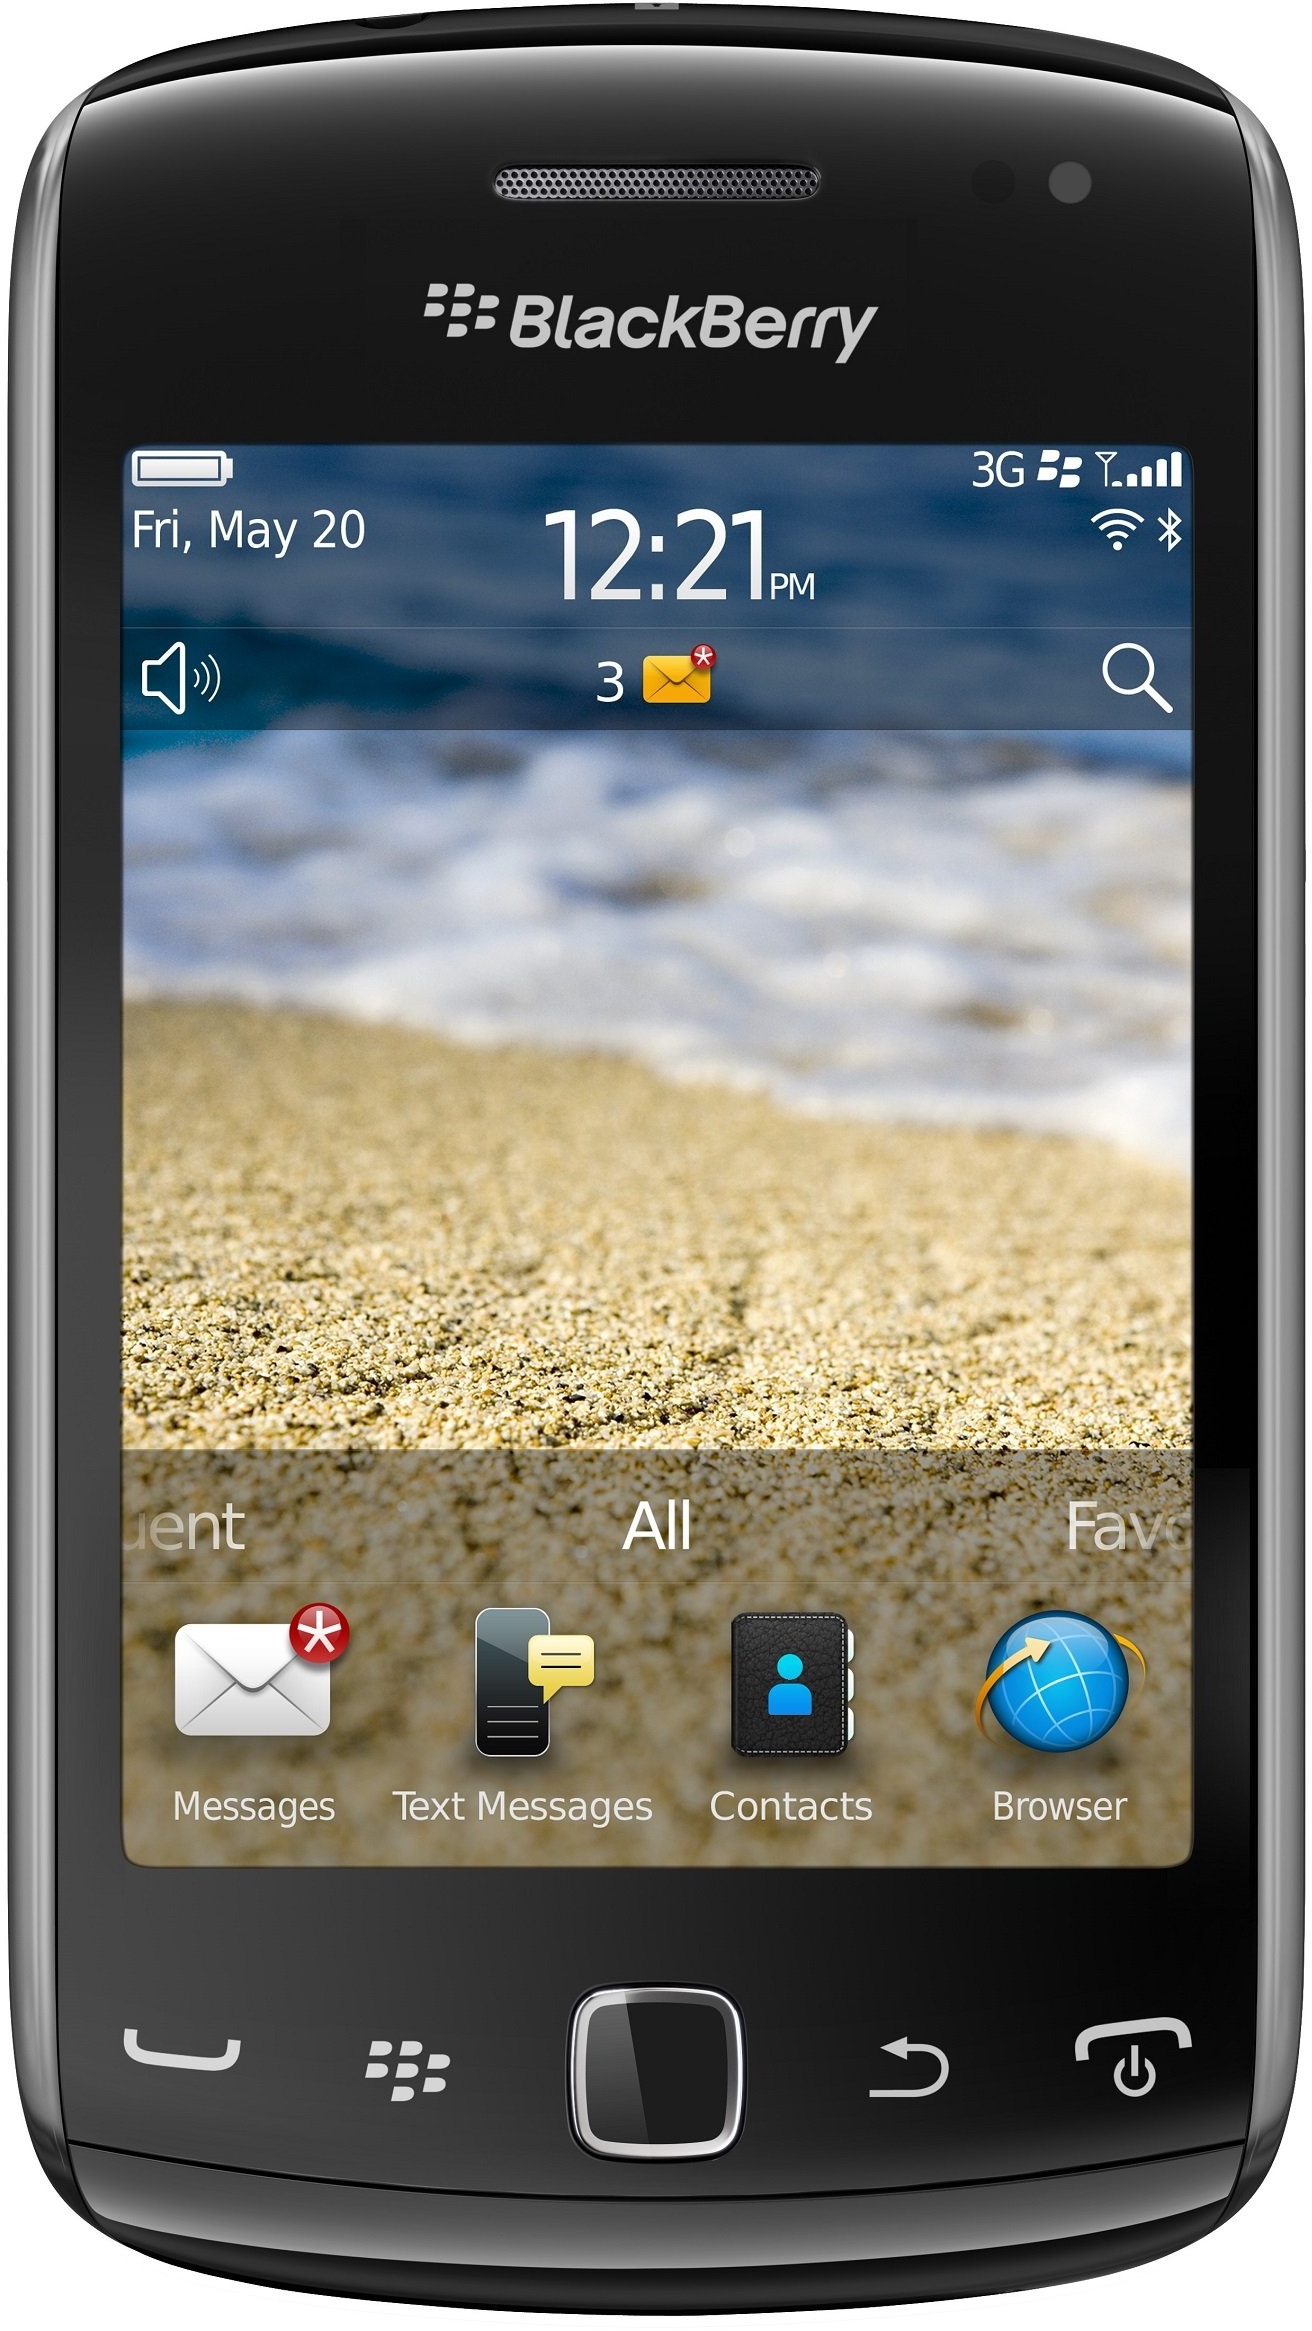 Blackberry Curve 9380 Smartphone (8,1 cm (3,2 Zoll) Touchscreen-Display, 5 Megapixel Kamera) schwarz